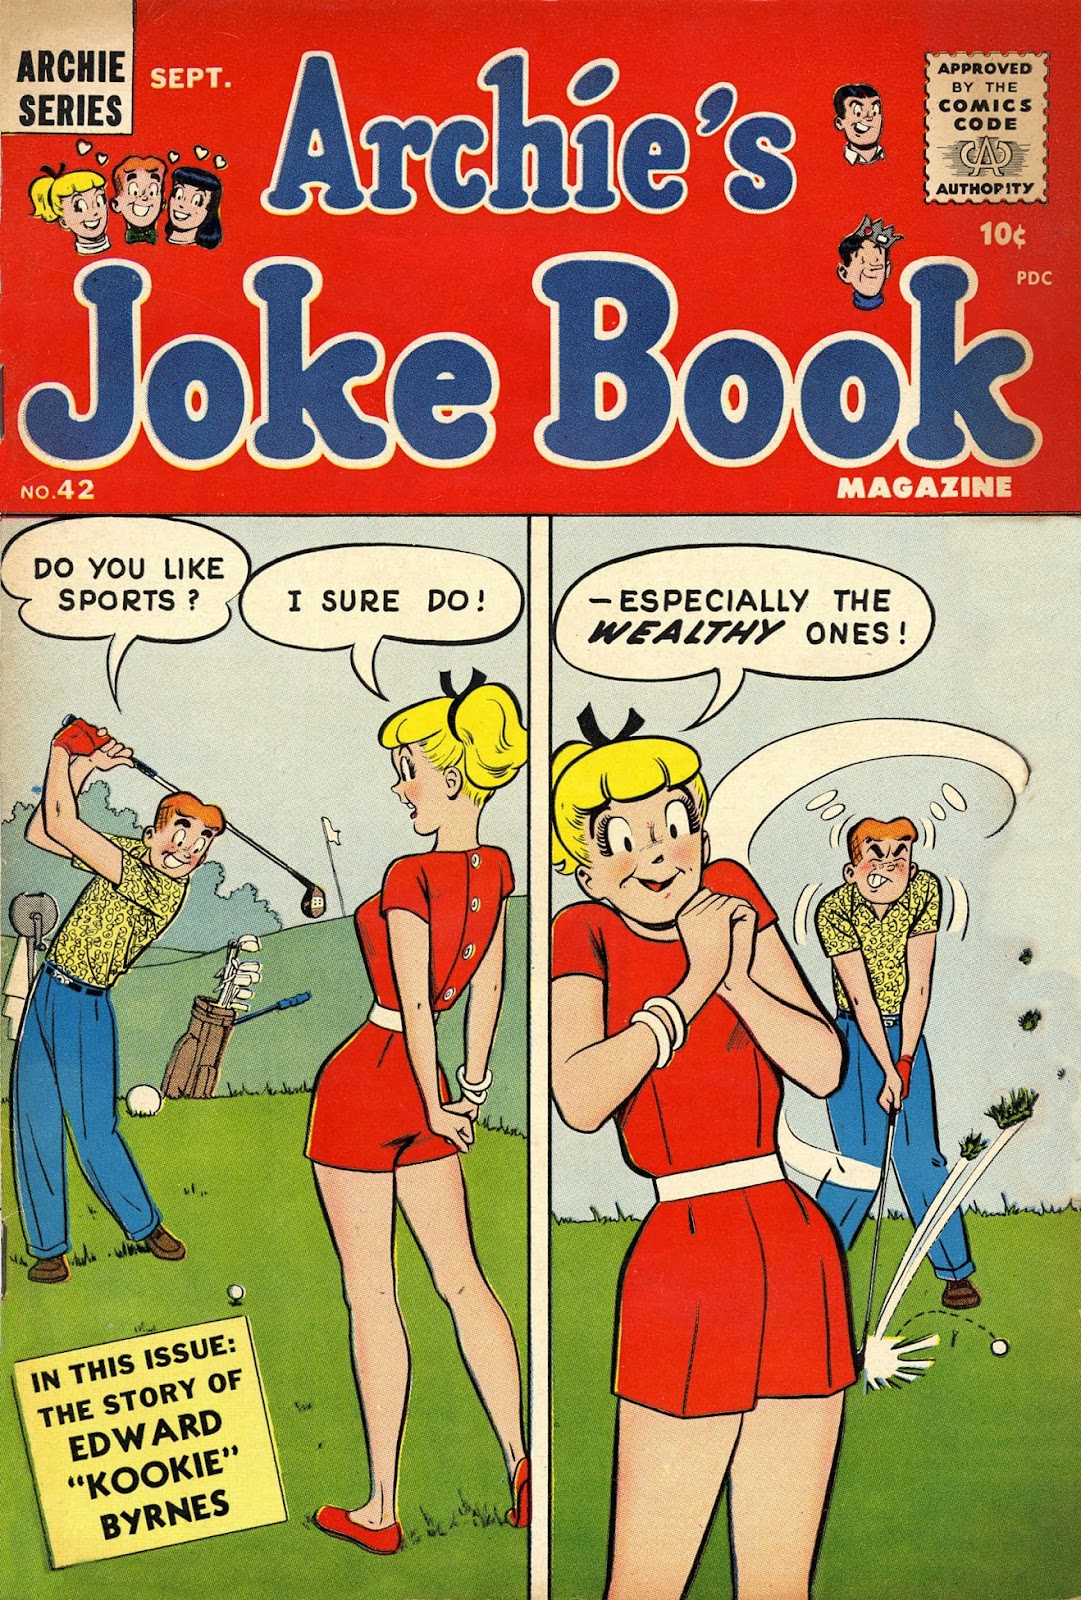 Archie's Joke Book Magazine 42 Page 1